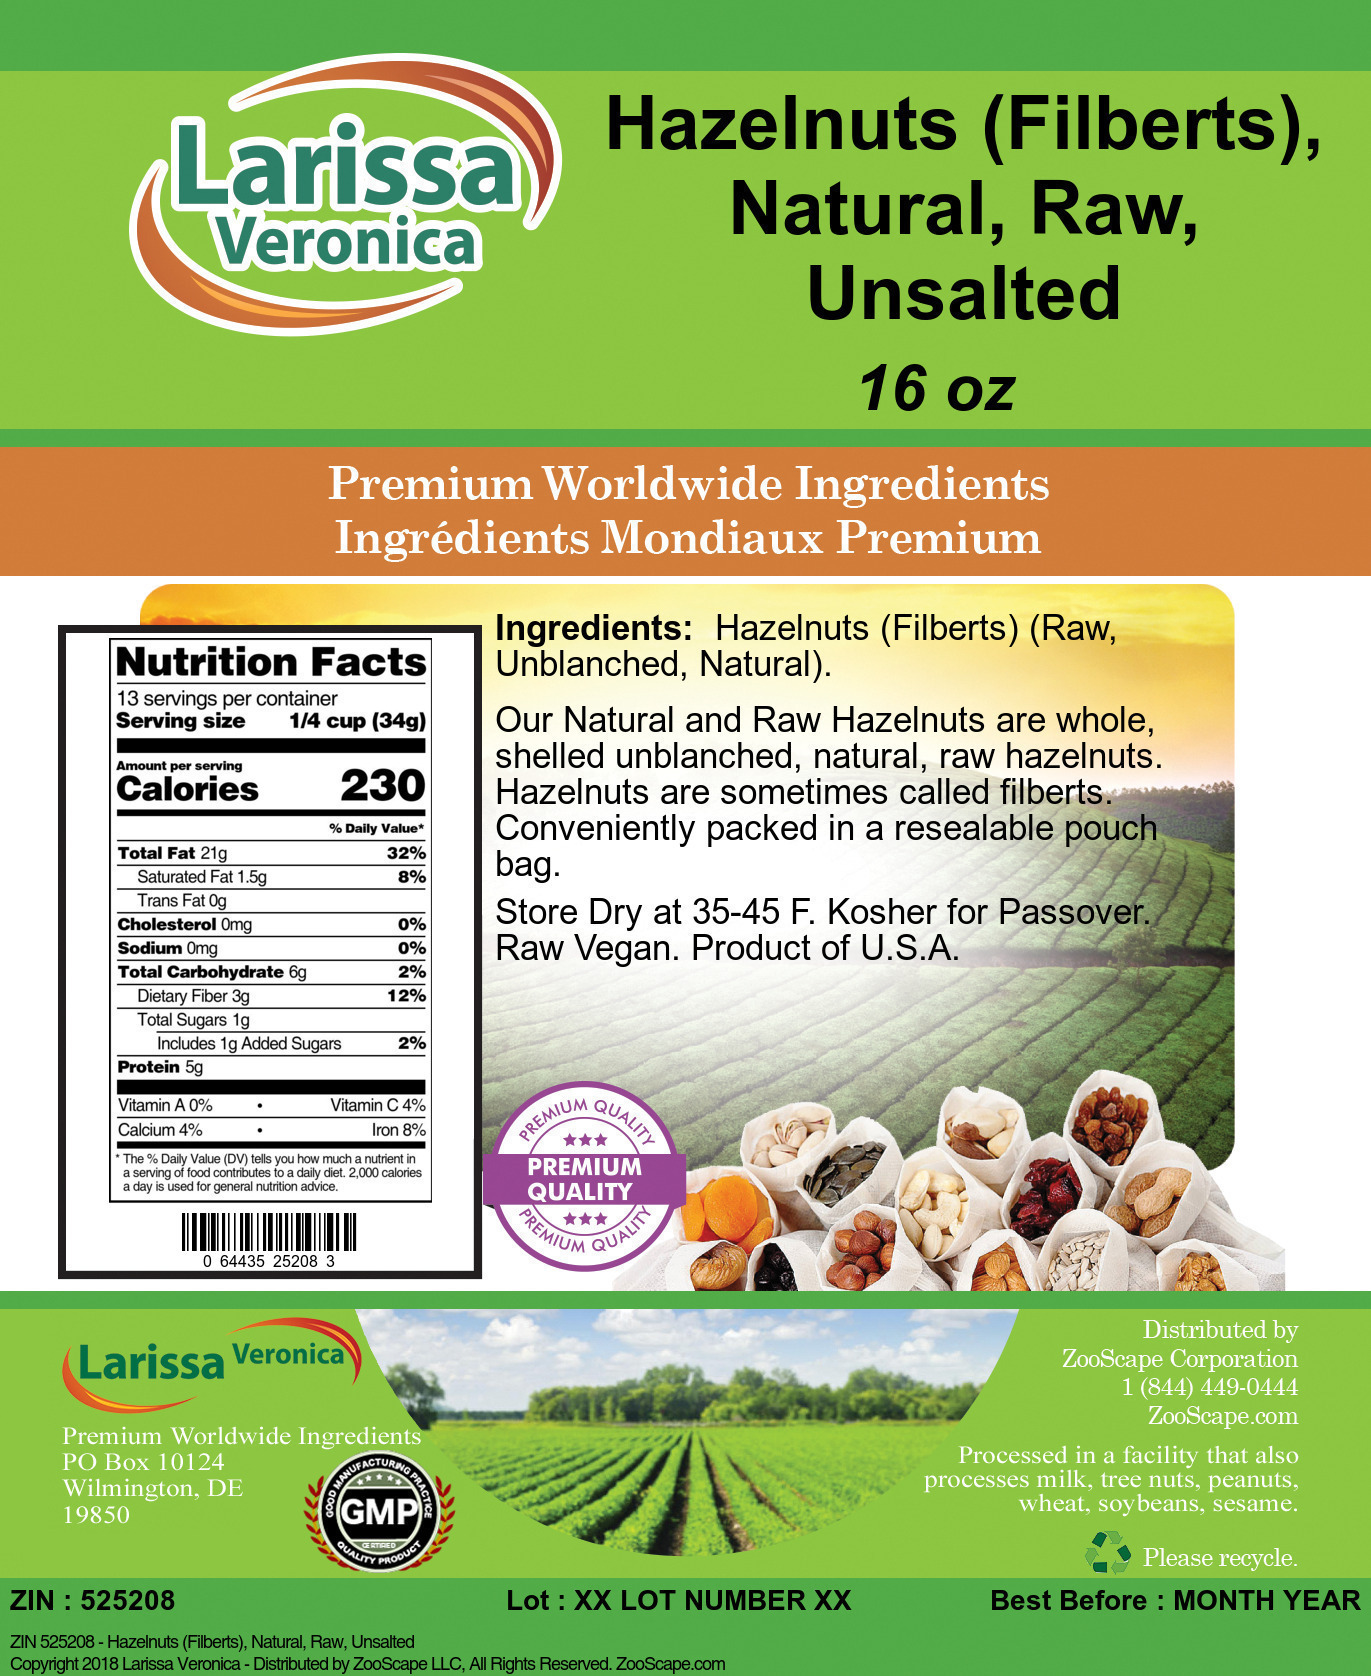 Hazelnuts (Filberts), Natural, Raw, Unsalted - Label